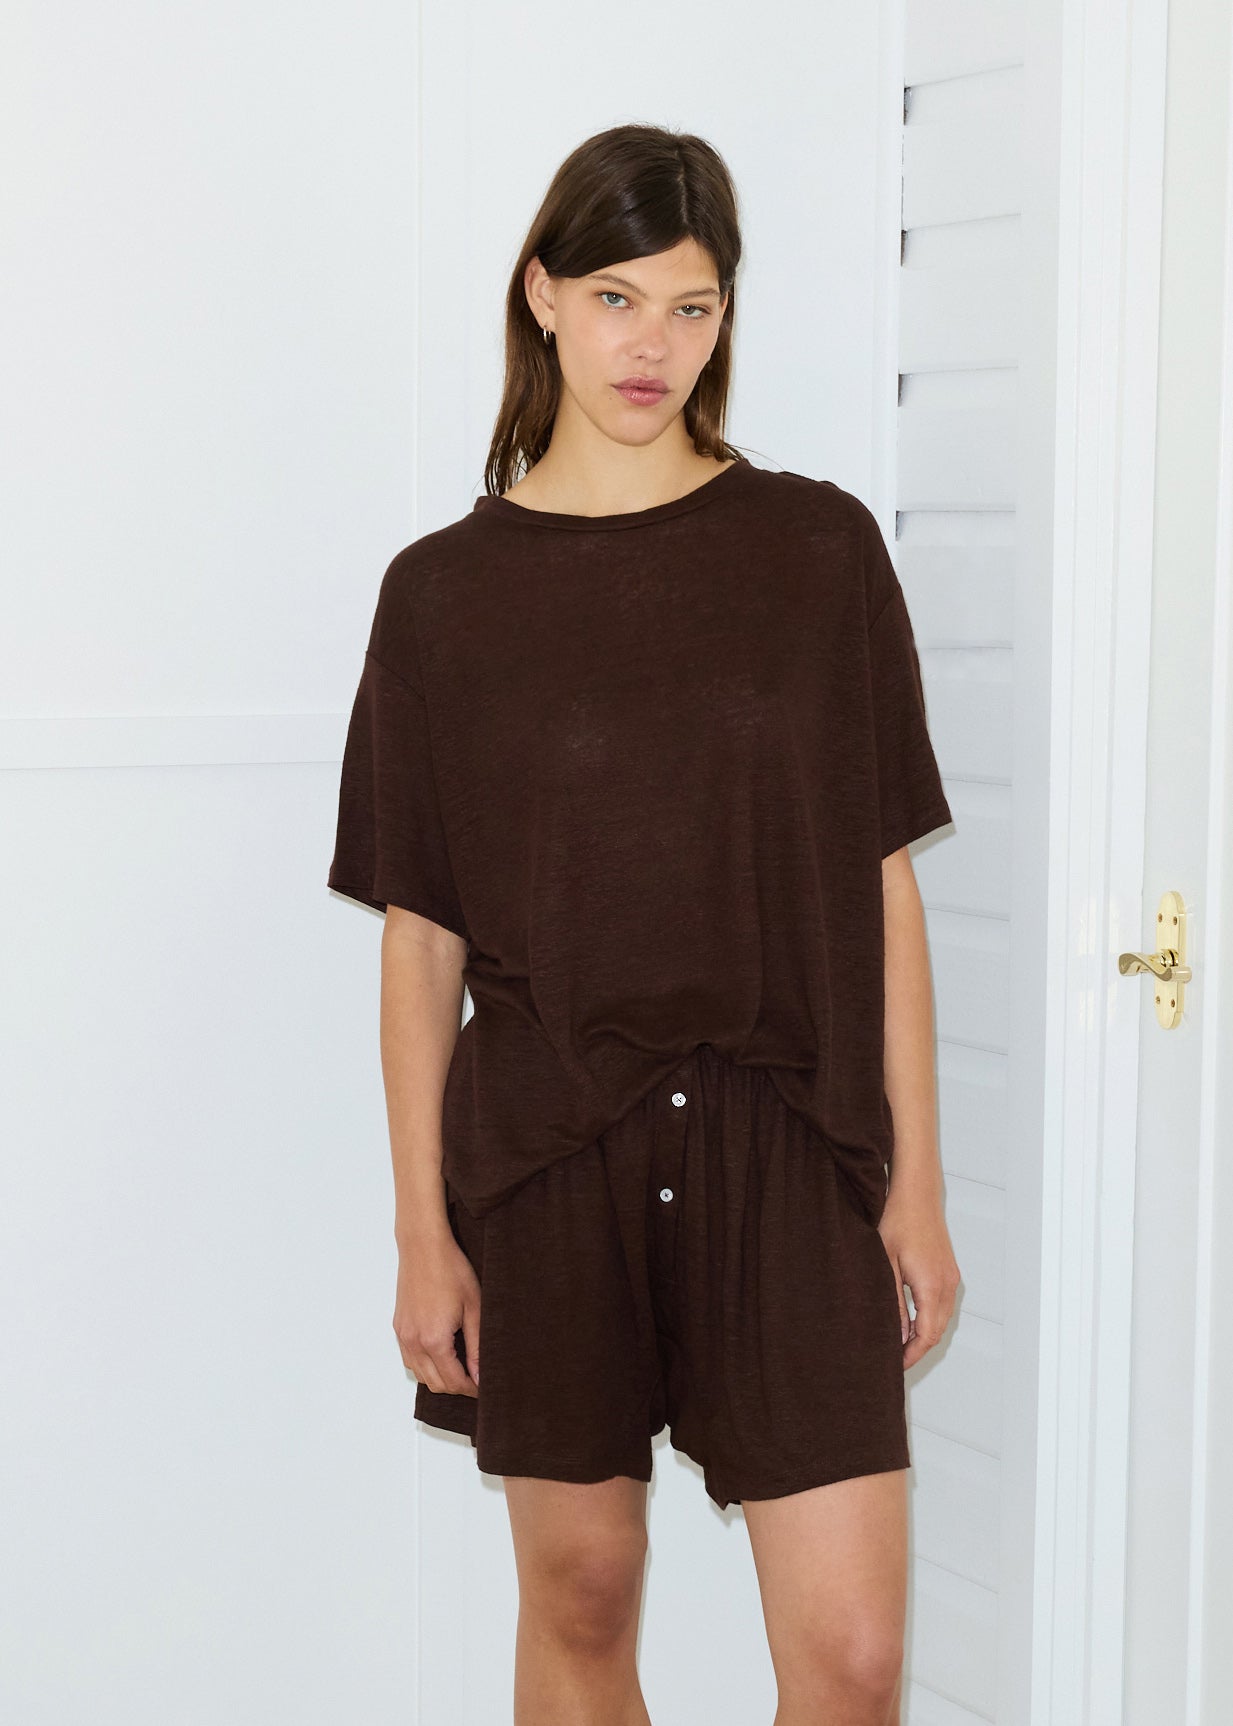 Female model wearing soft short - chocolate by Deiji Studios against plain background